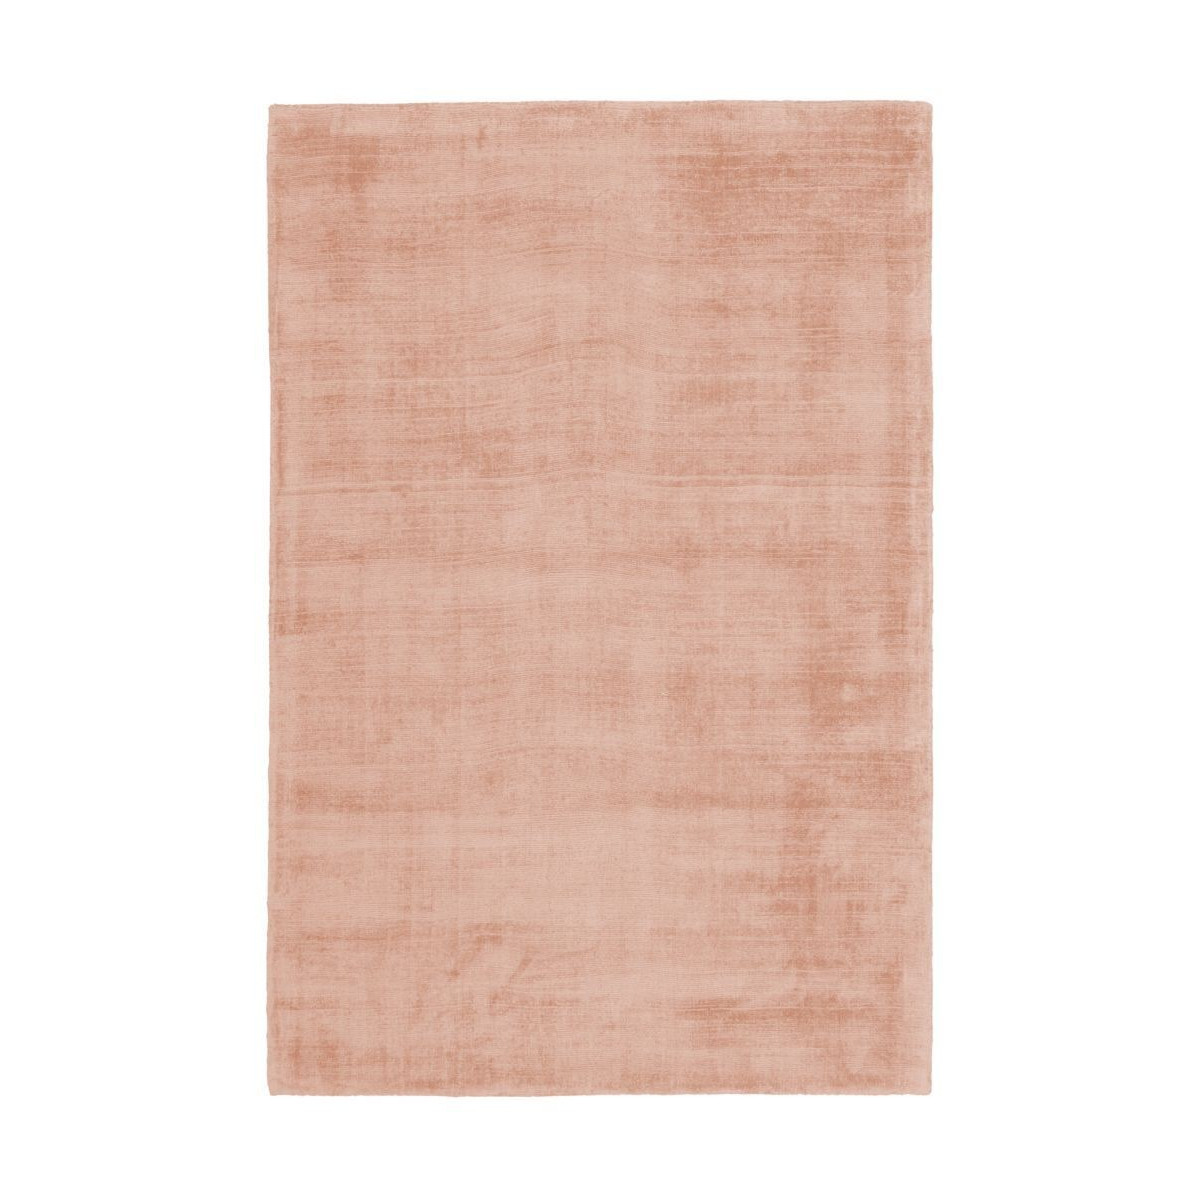 Ručně tkaný kusový koberec Maori 220 Powder pink